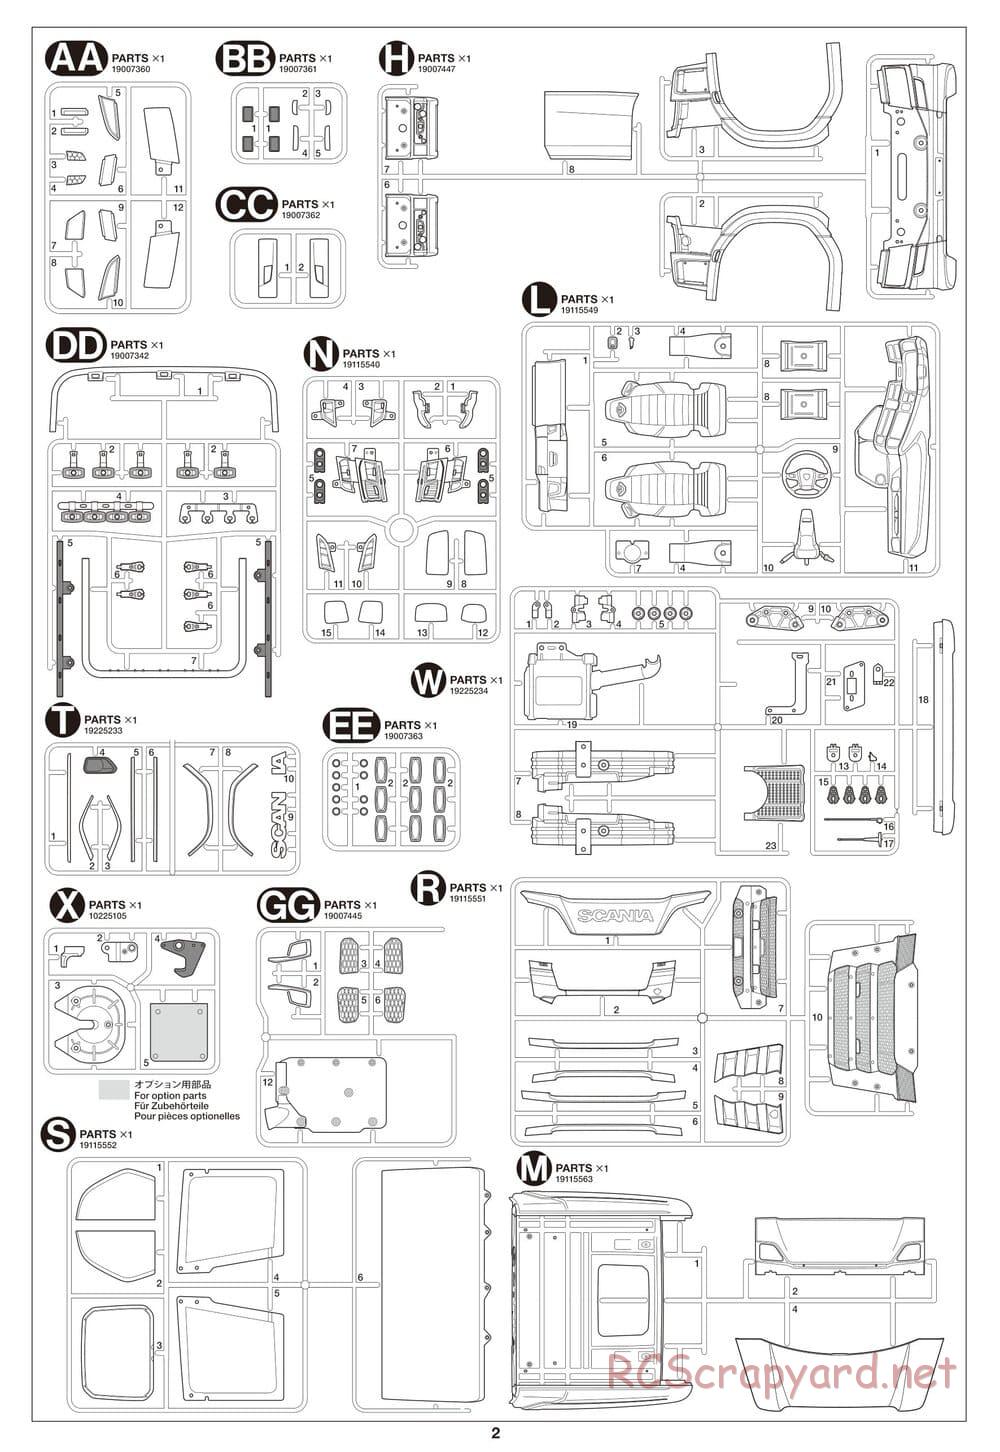 Tamiya - Scania 770 S 8x4/4 Chassis - Parts Manual - Page 2